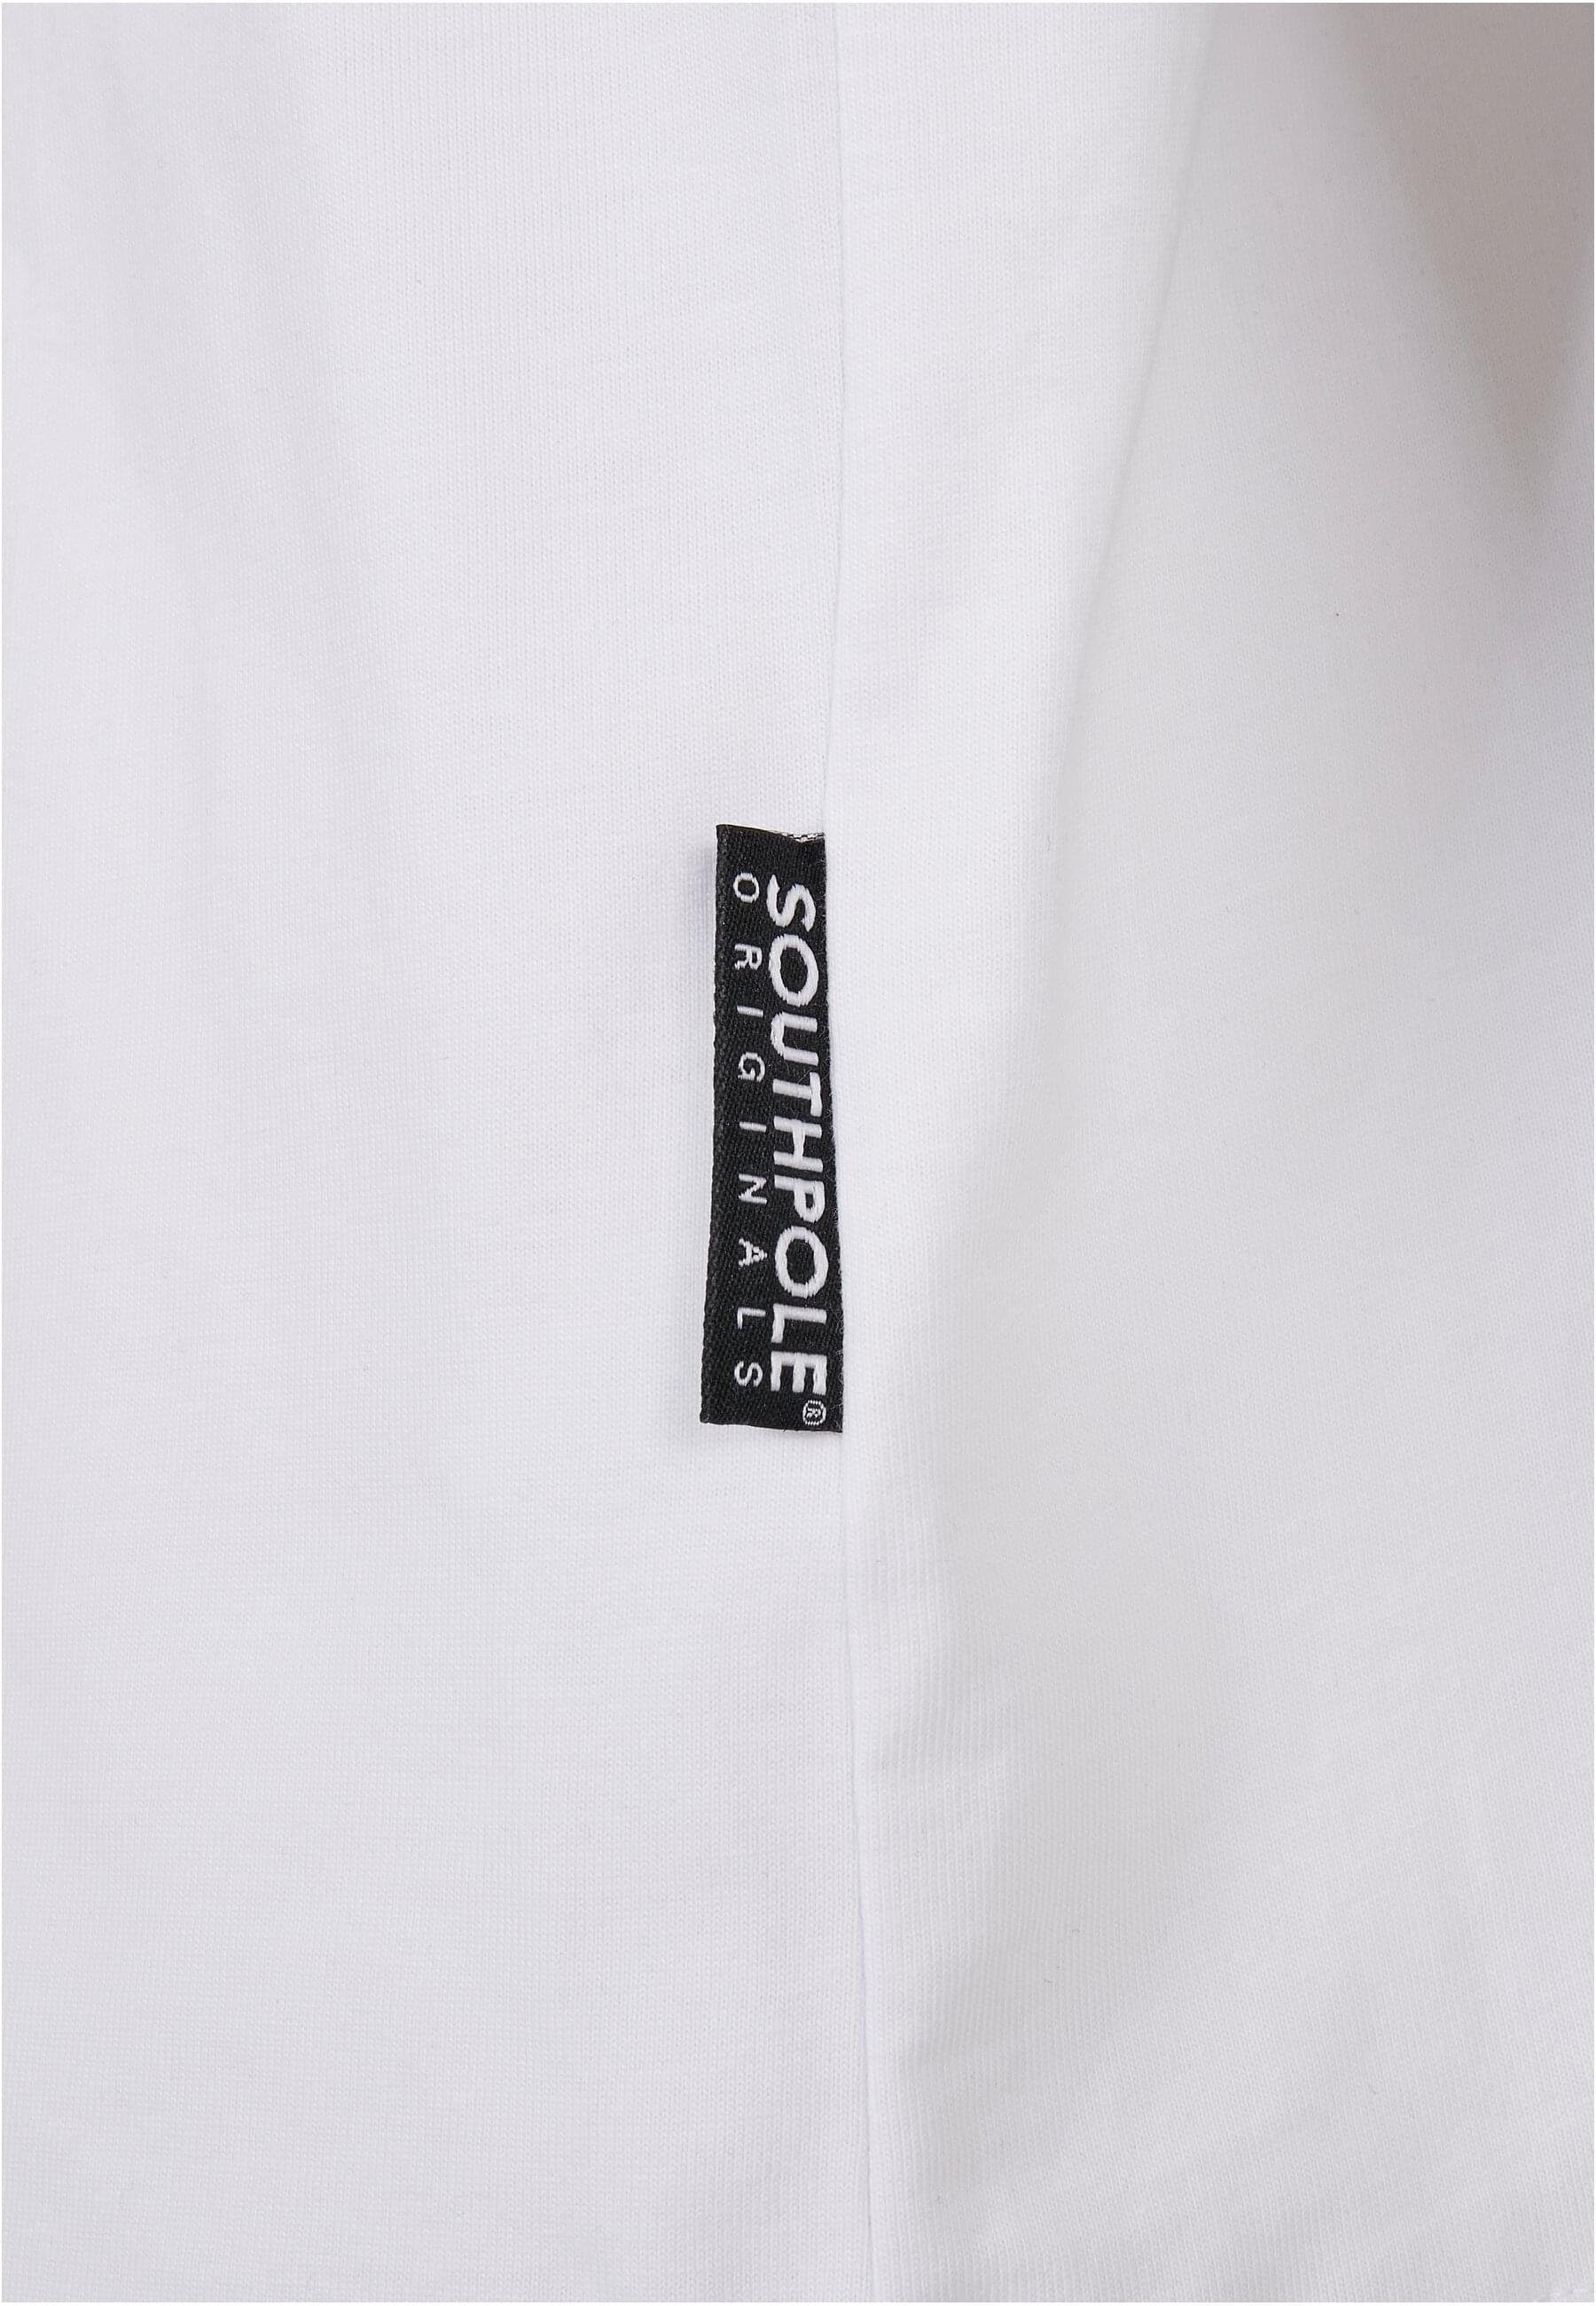 T-Shirt Herren Puffer (1-tlg) Print Southpole Southpole Tee white